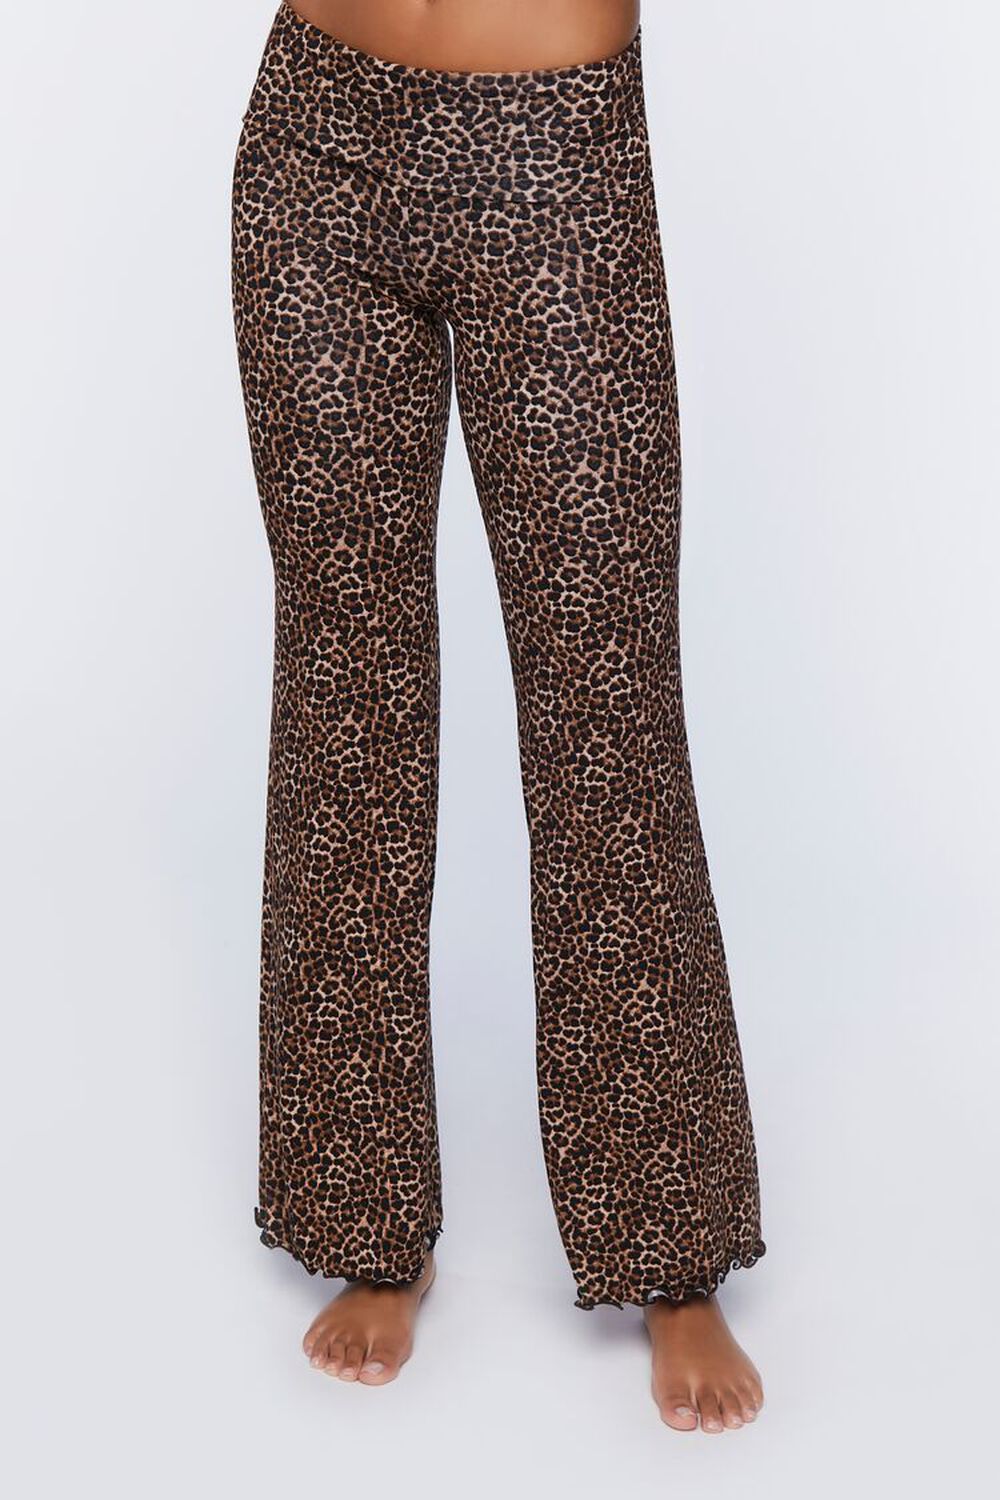 TAN/BLACK Leopard Print Pajama Pants, image 2